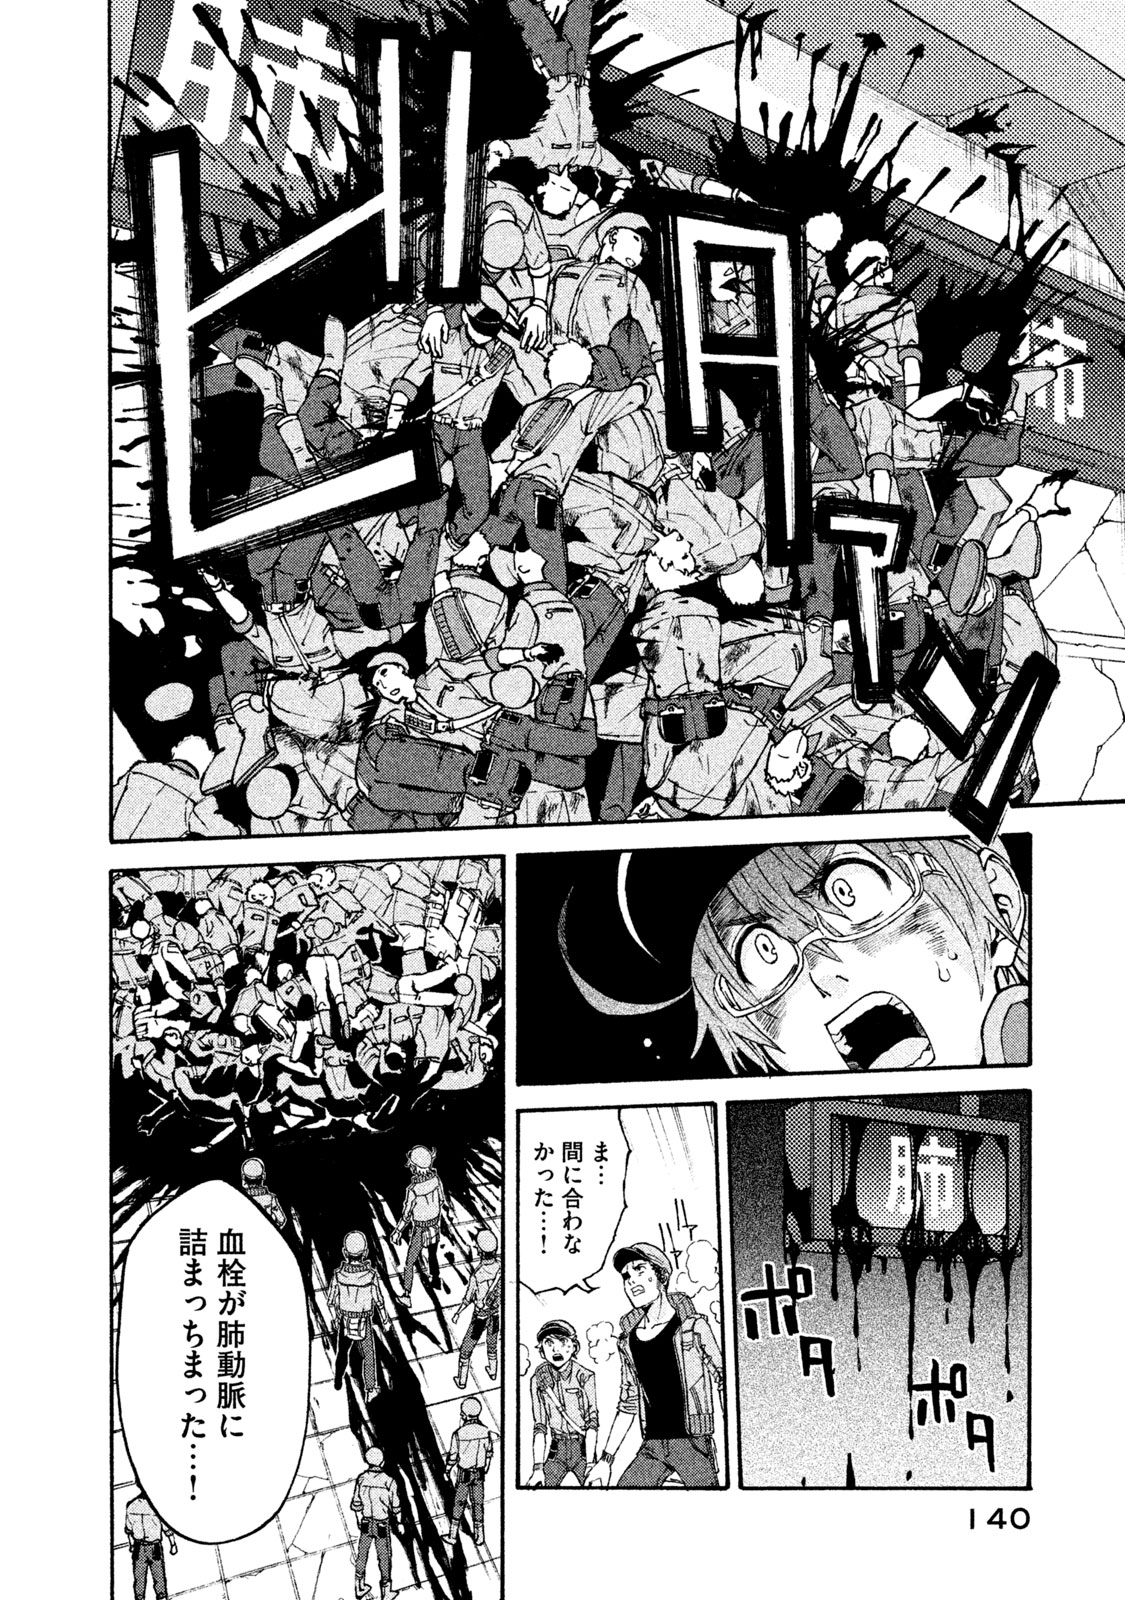 Hataraku Saibou BLACK - Chapter 17 - Page 4